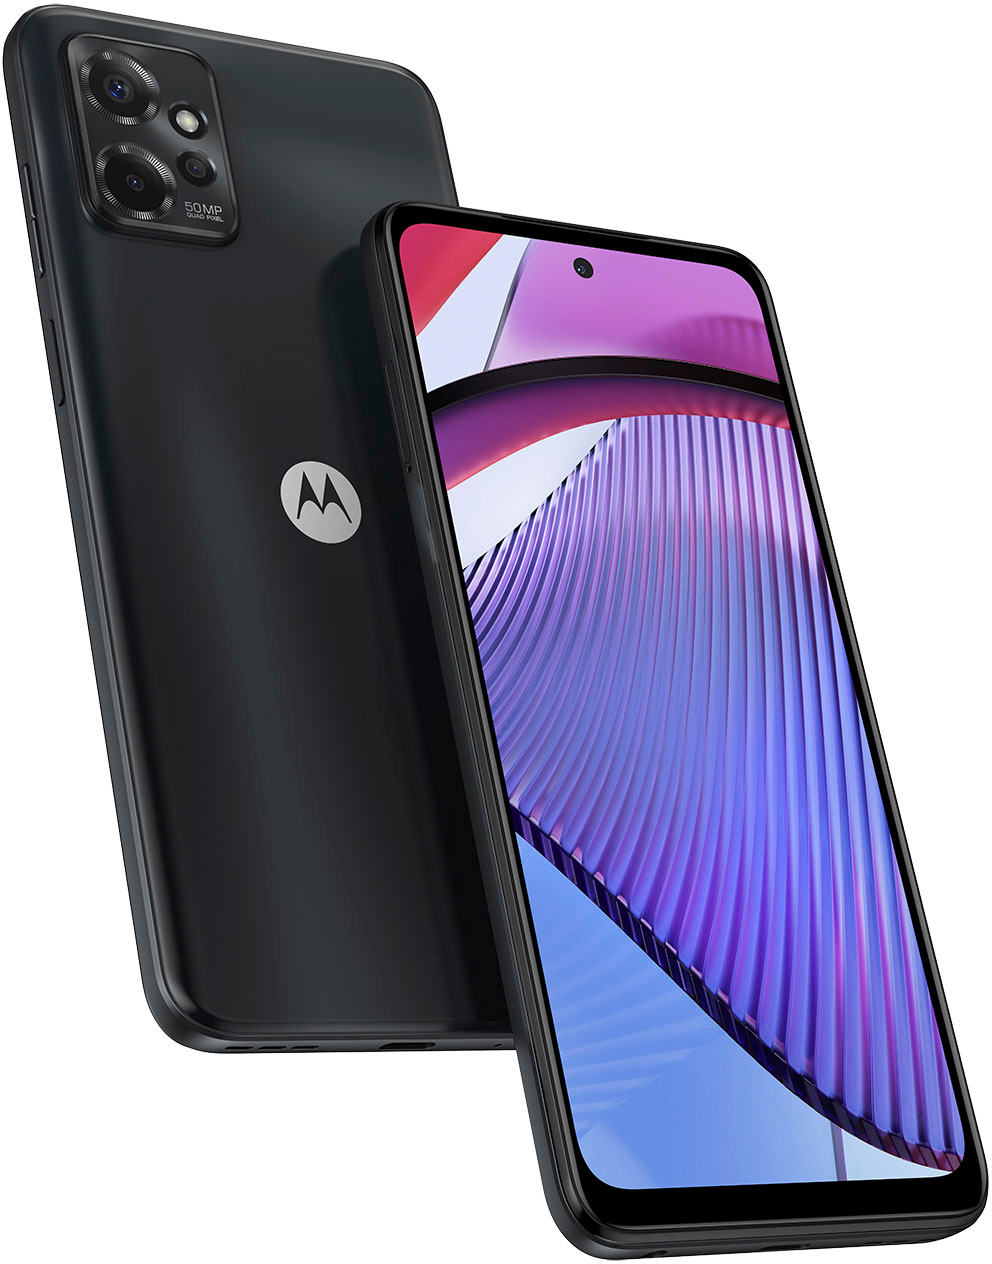 Motorola Moto G4 - Full phone specifications